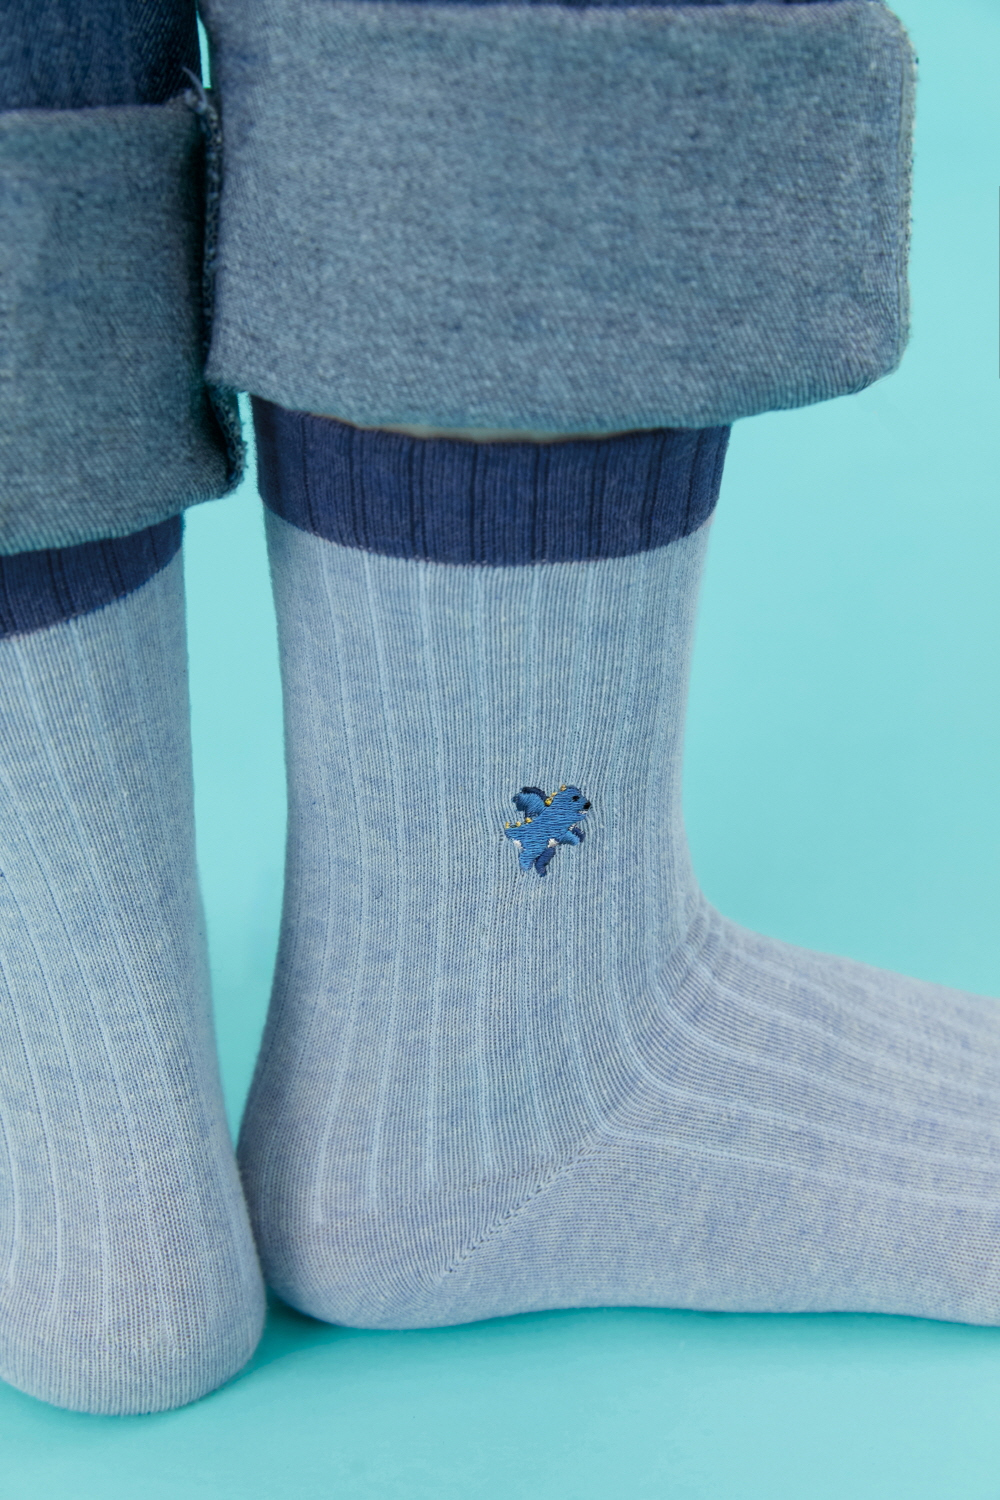 socks detail image-S1L45